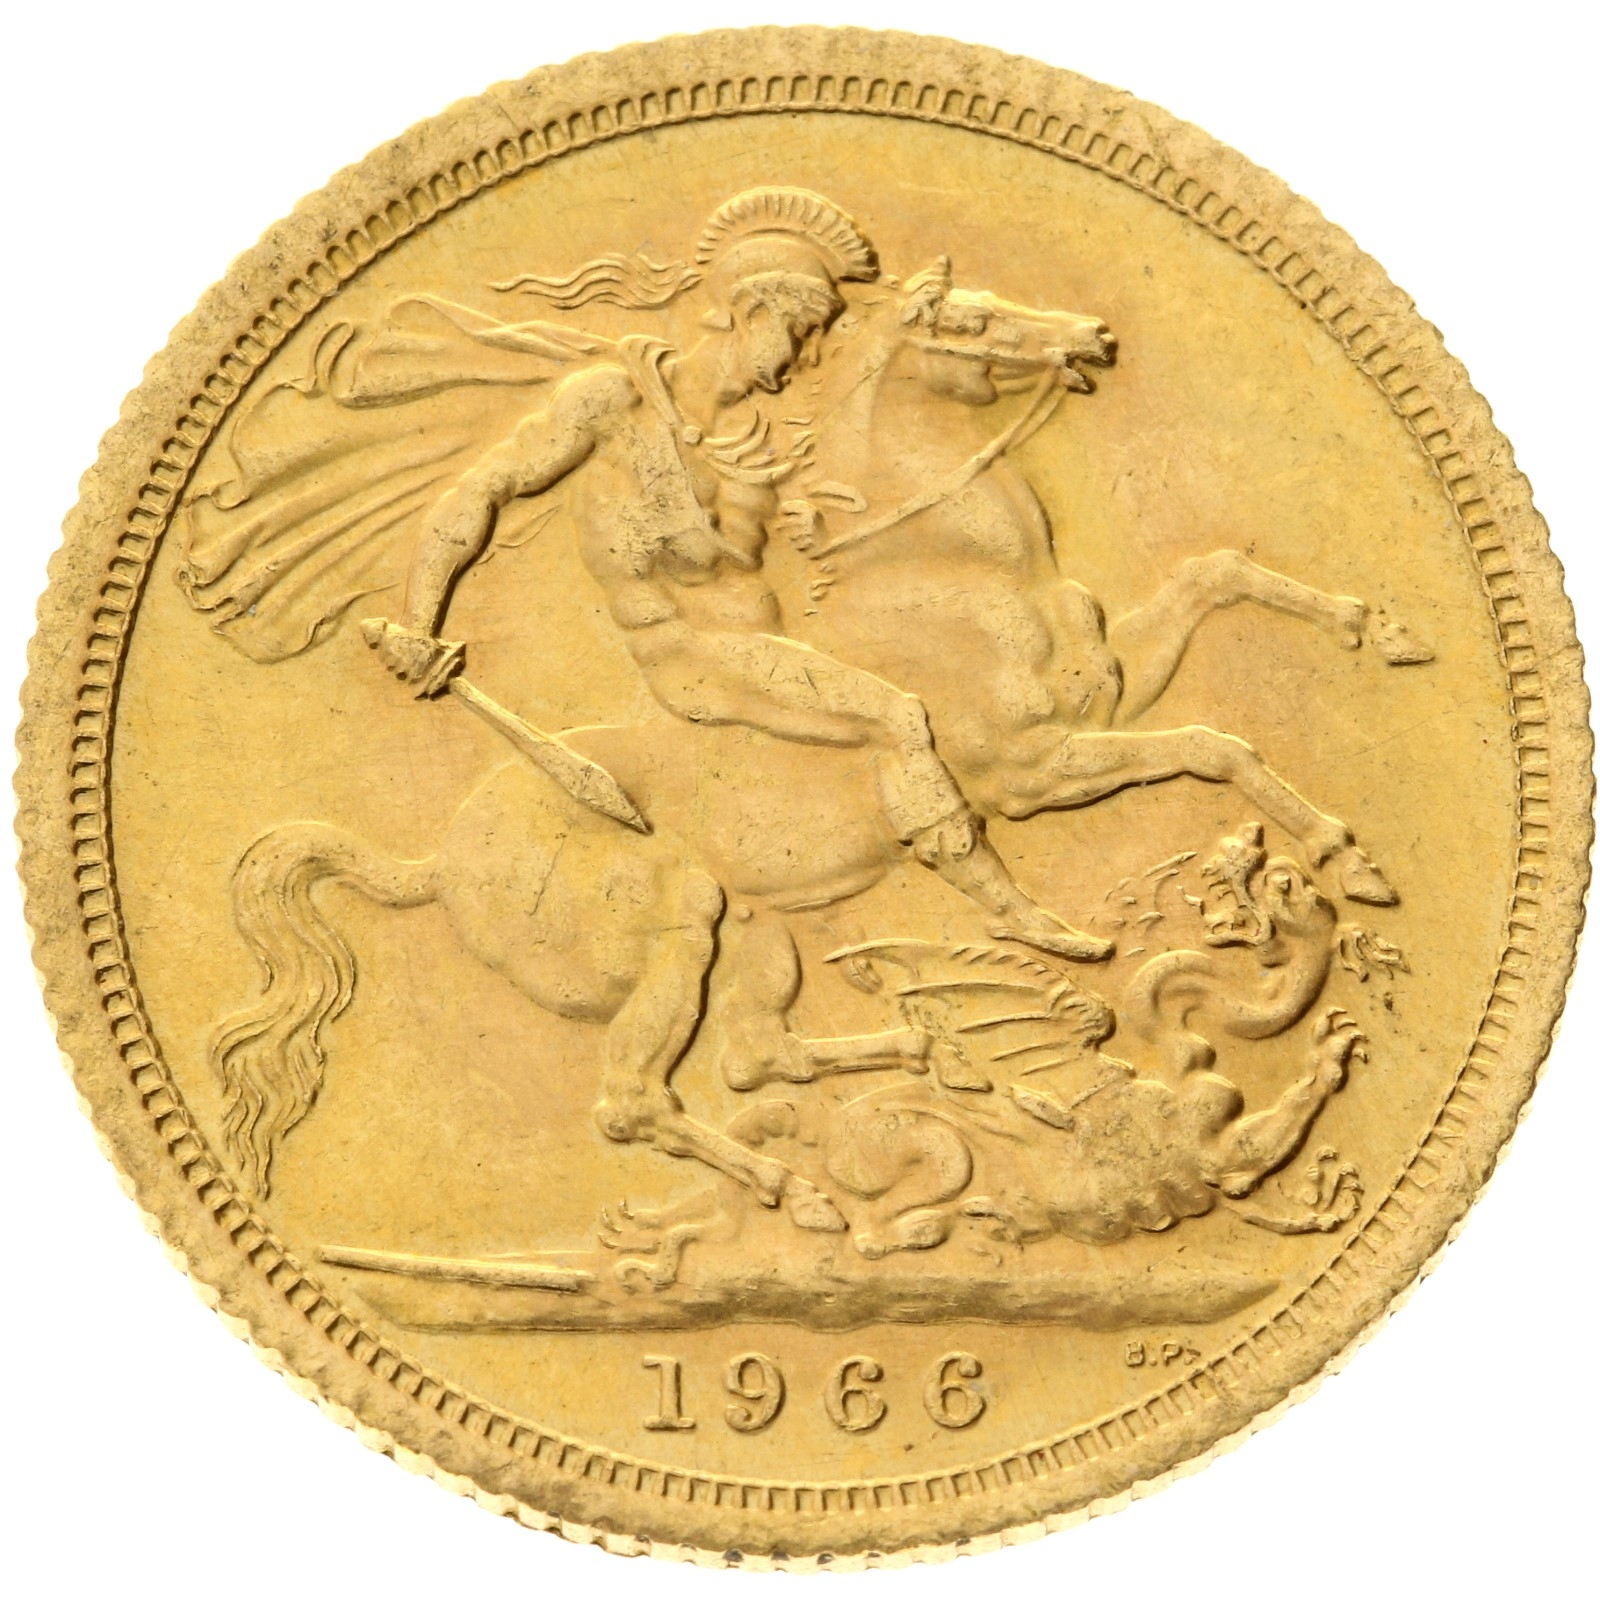 United Kingdom - 1 Sovereign - 1966 - Elizabeth II